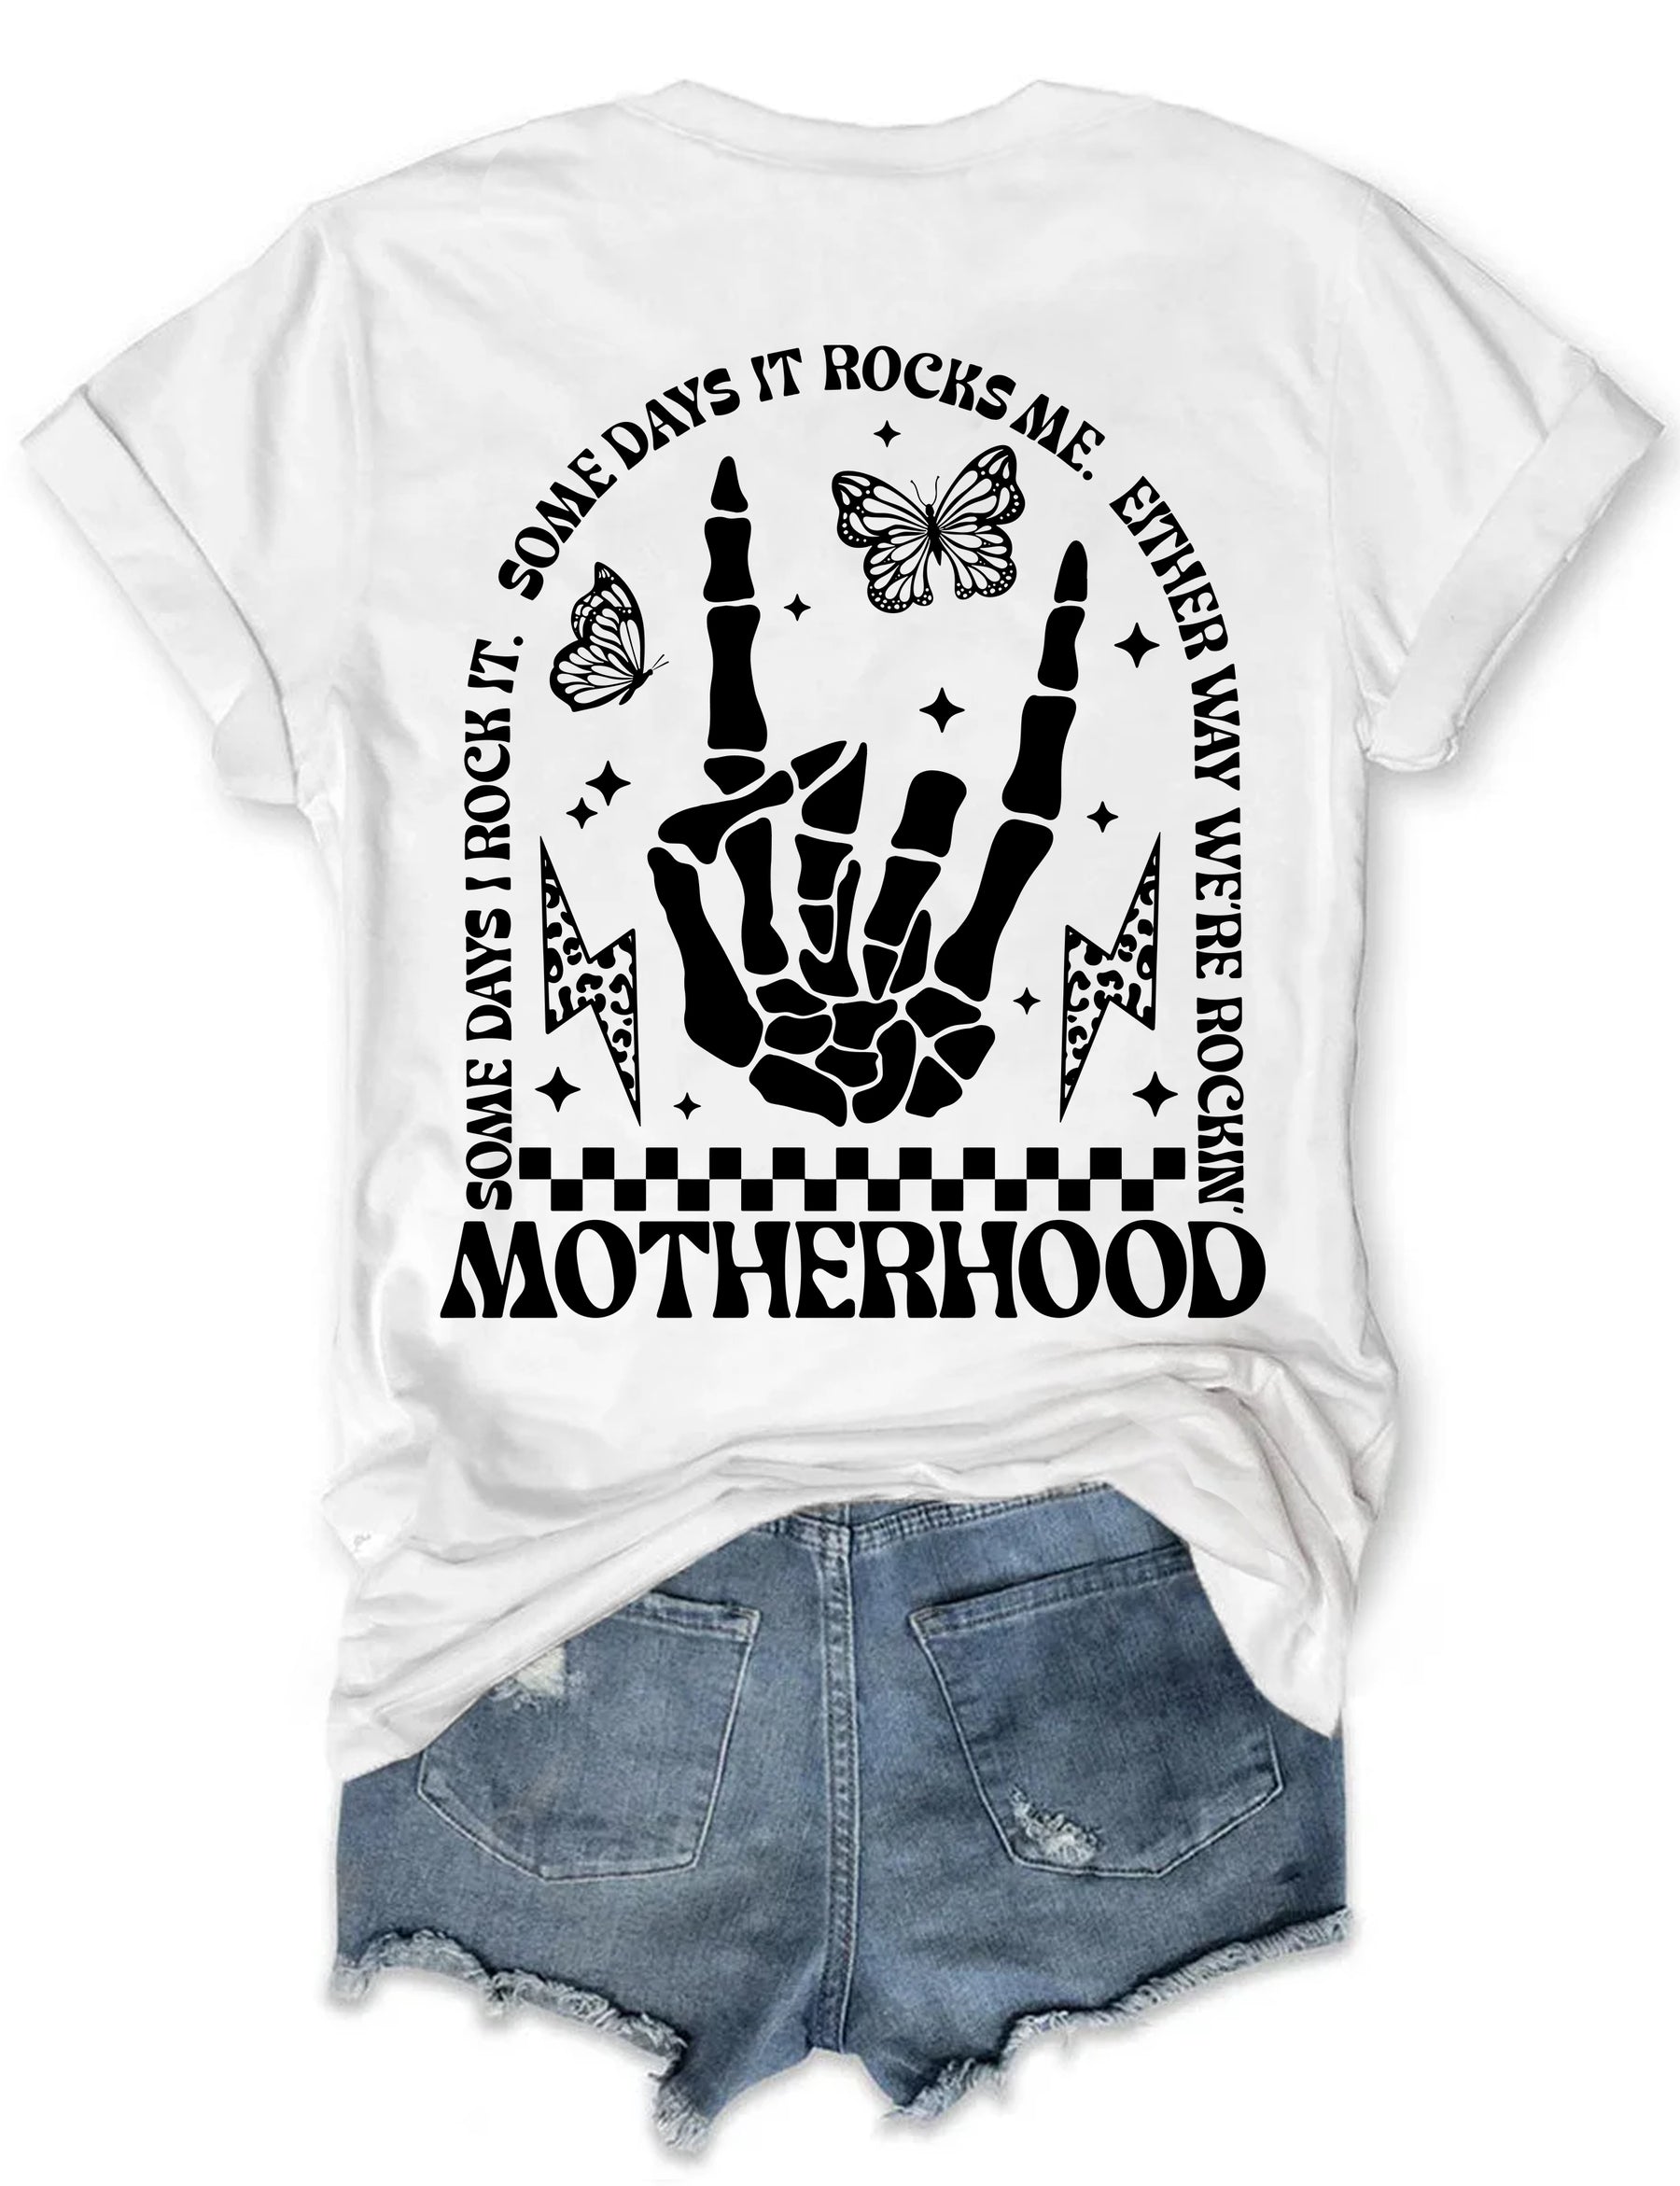 Motherhood Some Day I Rock It T-shirt